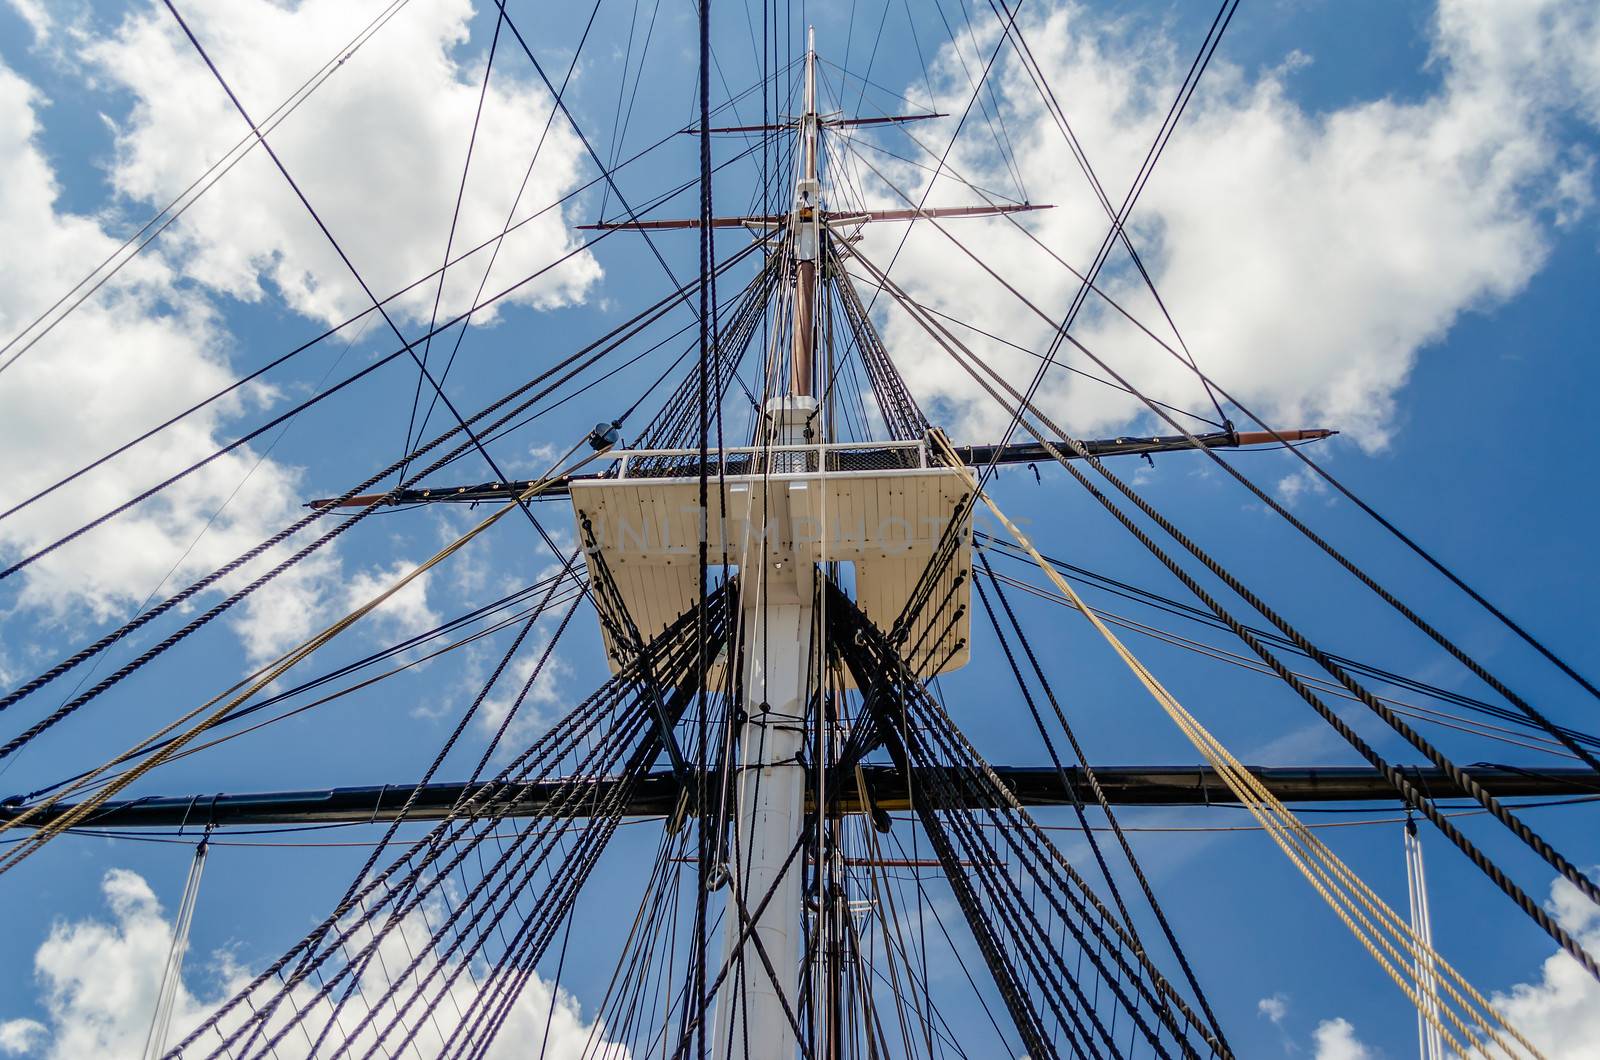 Ship Mast against a blue sky by marcorubino